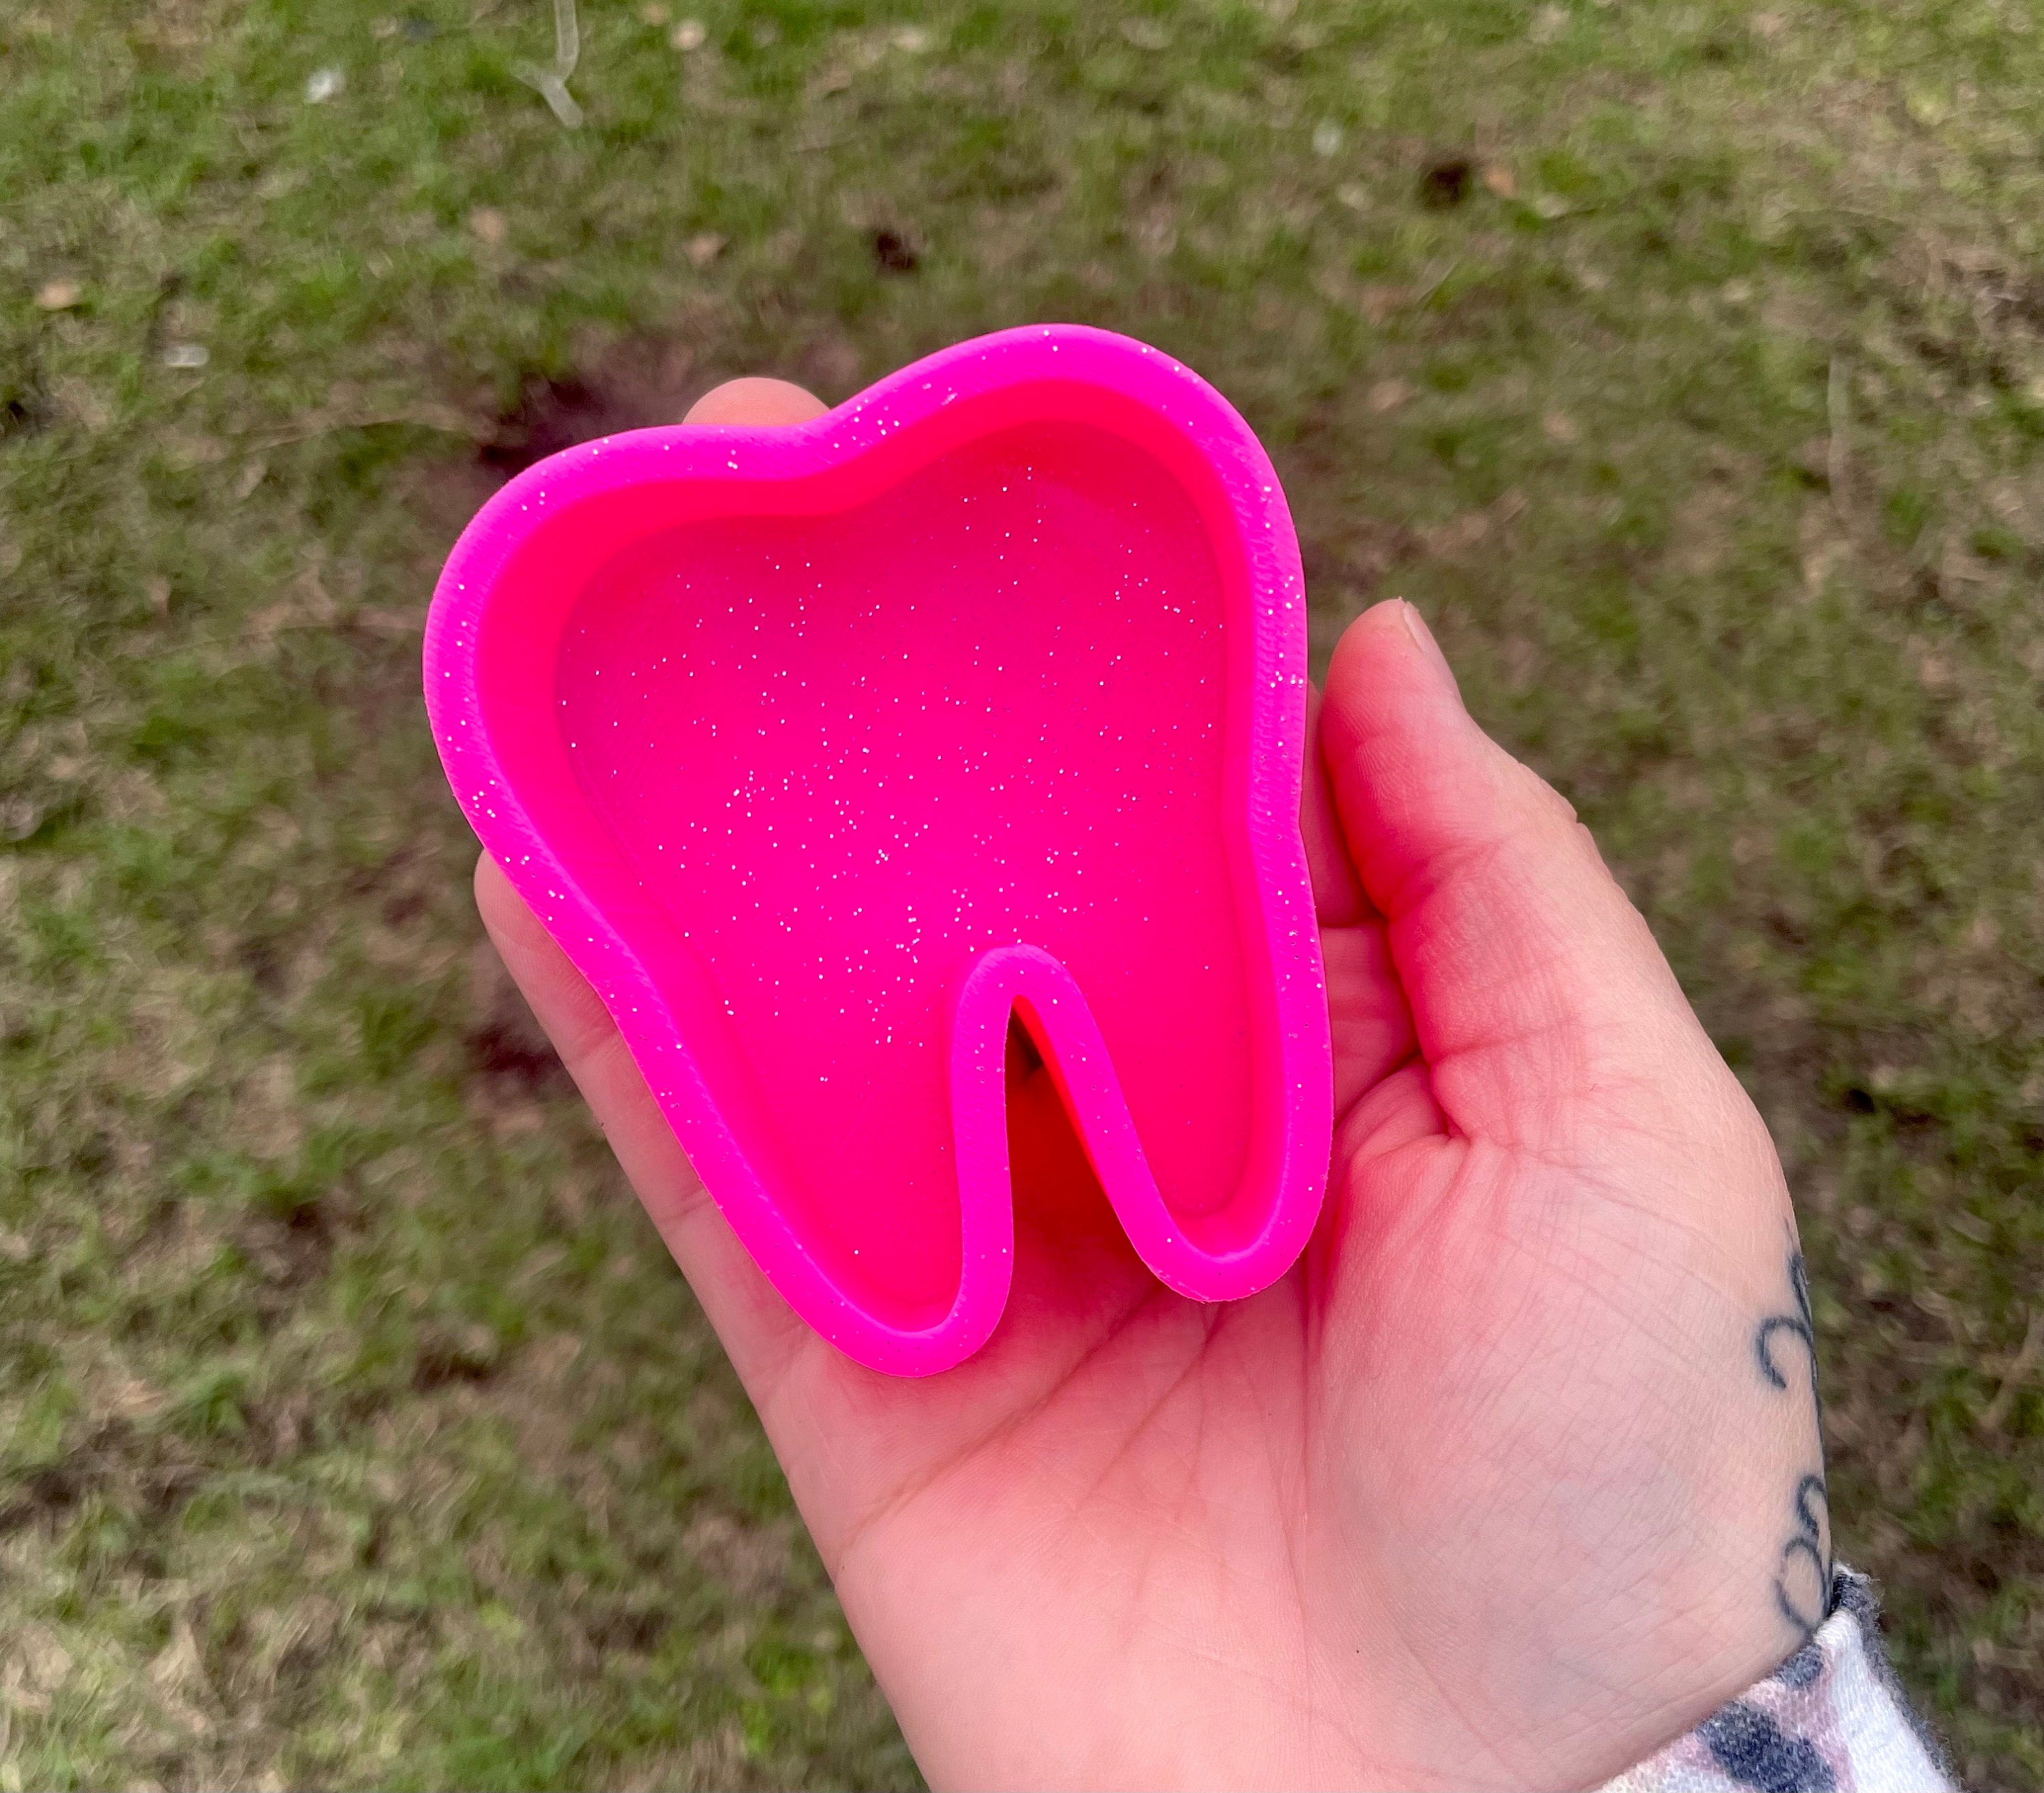 Teeth Plastic Mold-Molar Teeth Mold-Medical Theme Mold-DIY Mold-Candy  Mold-Chocolate Mold-Soap Mold-Bath Bomb Mold-Craft Mold-Plastic Mold